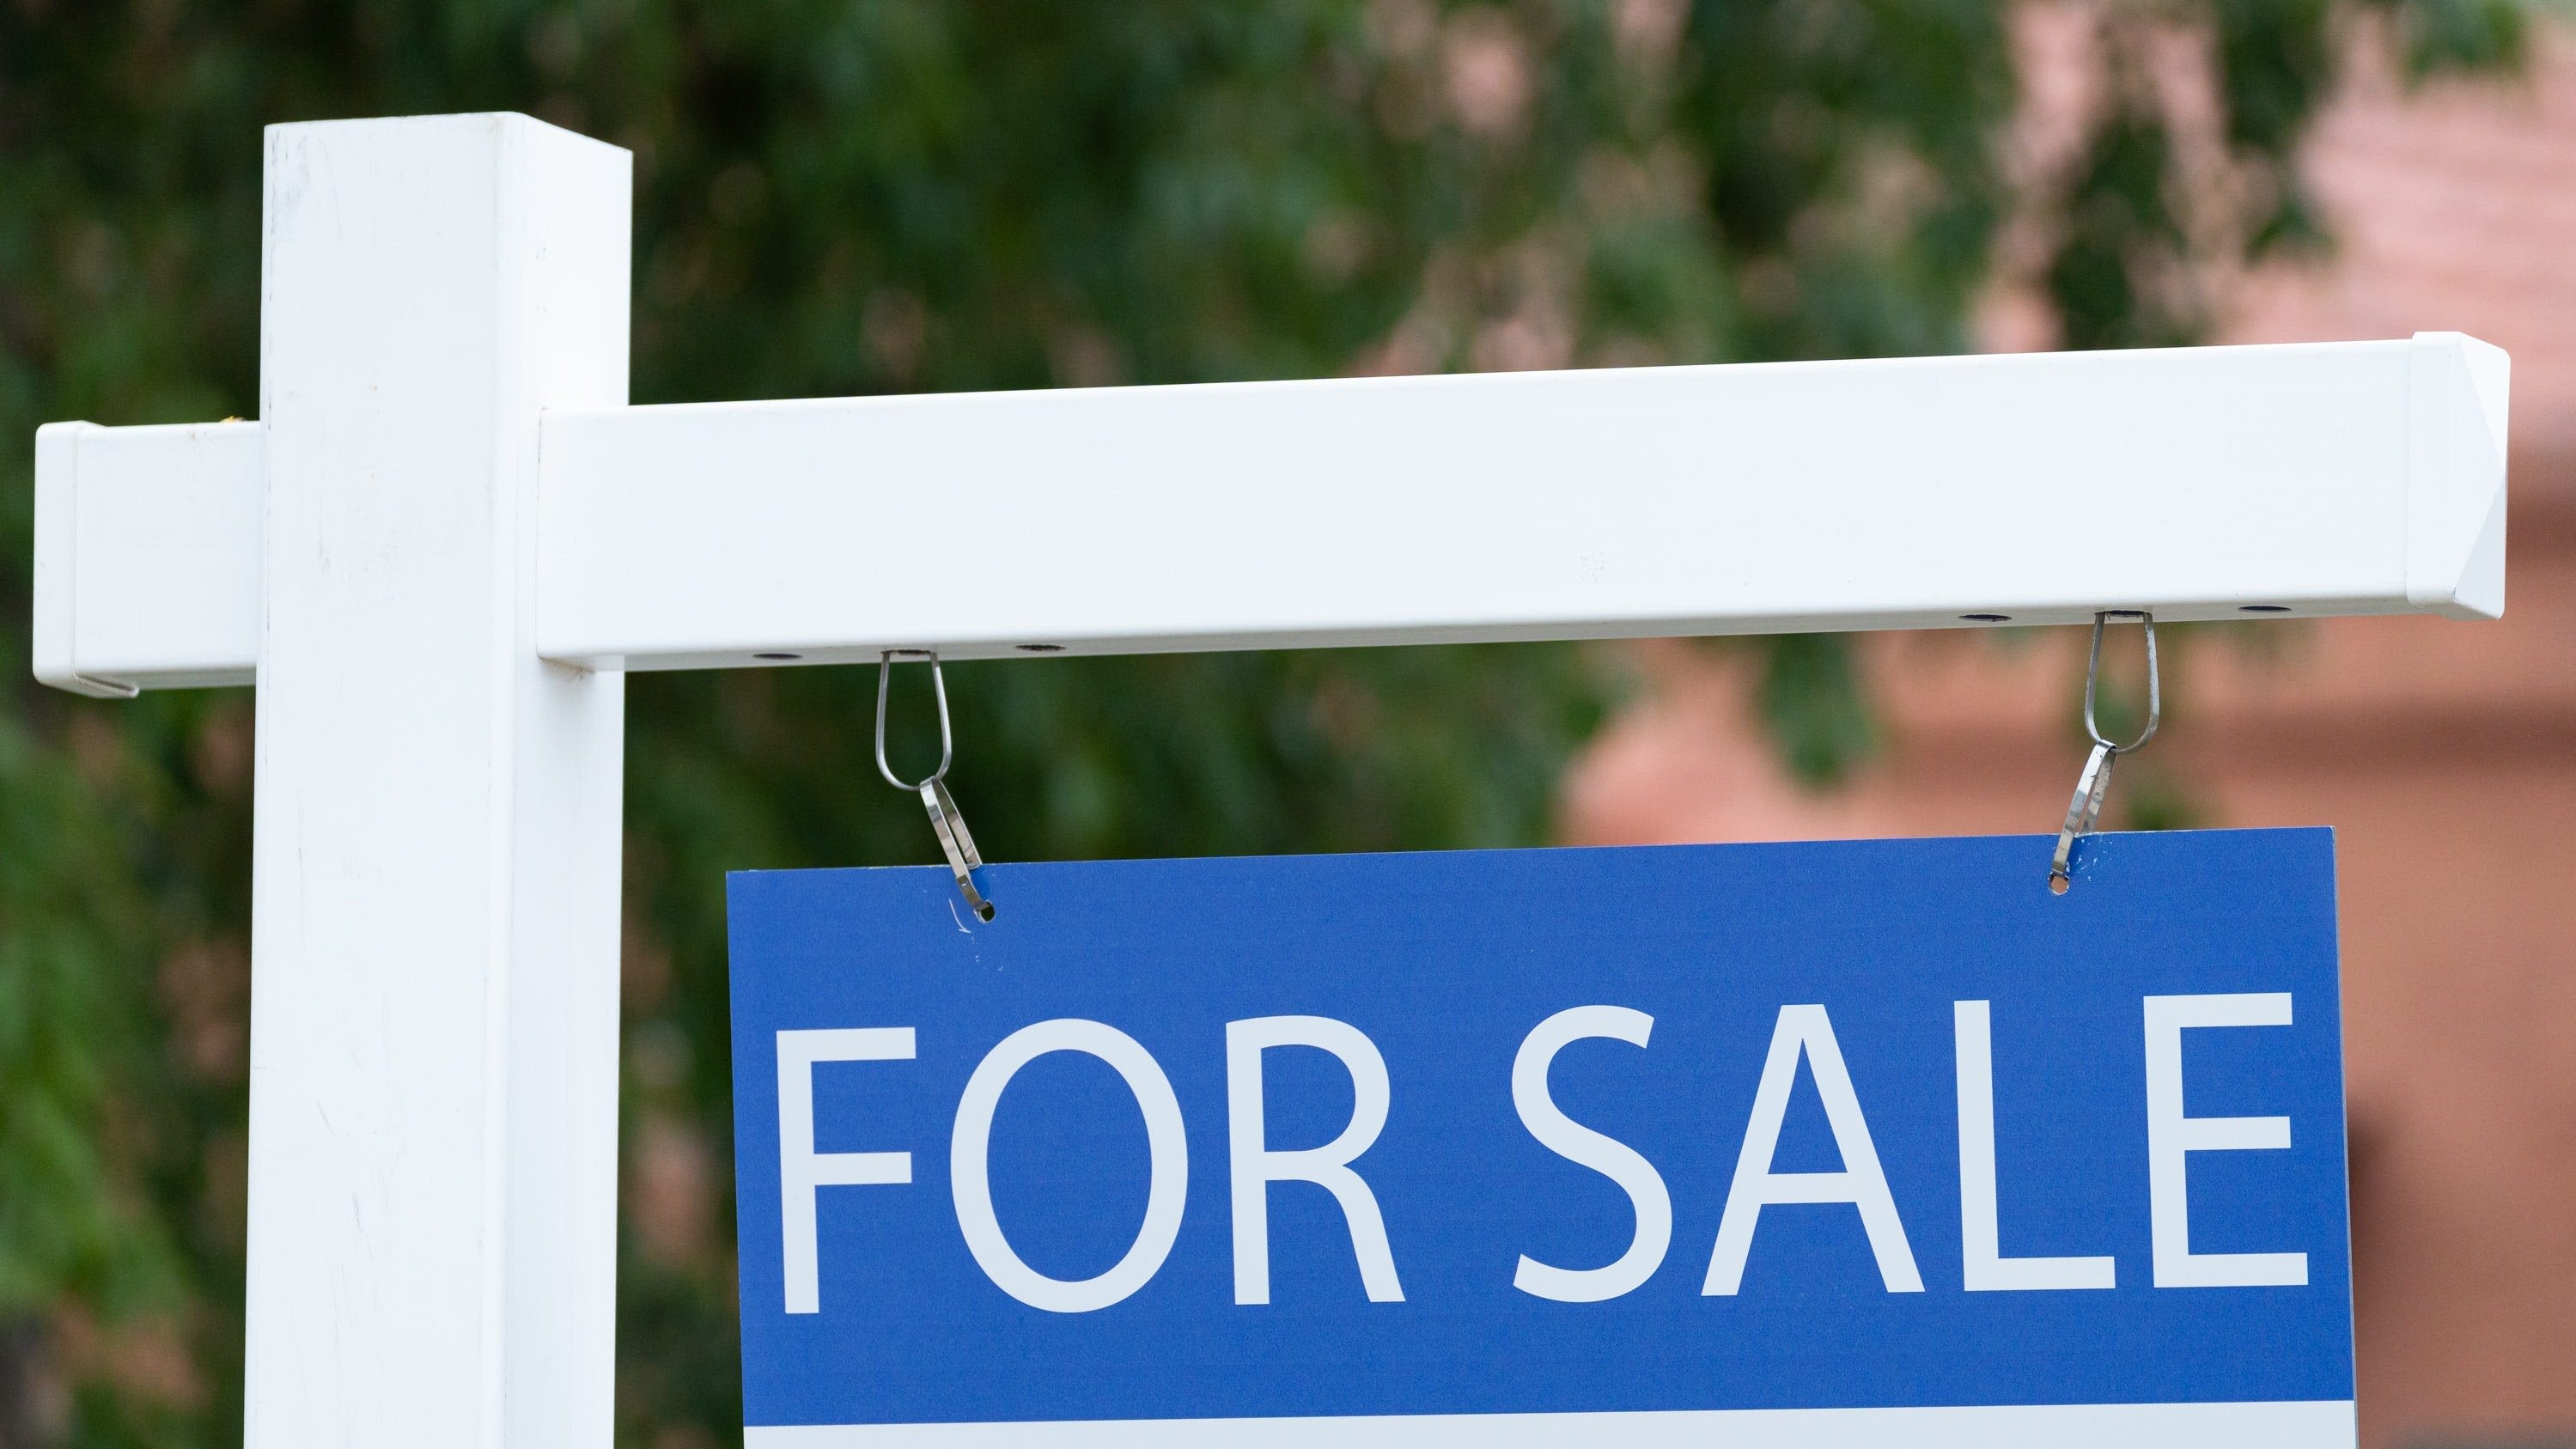 Property transfers: Plain Township property sells for $1.9 million